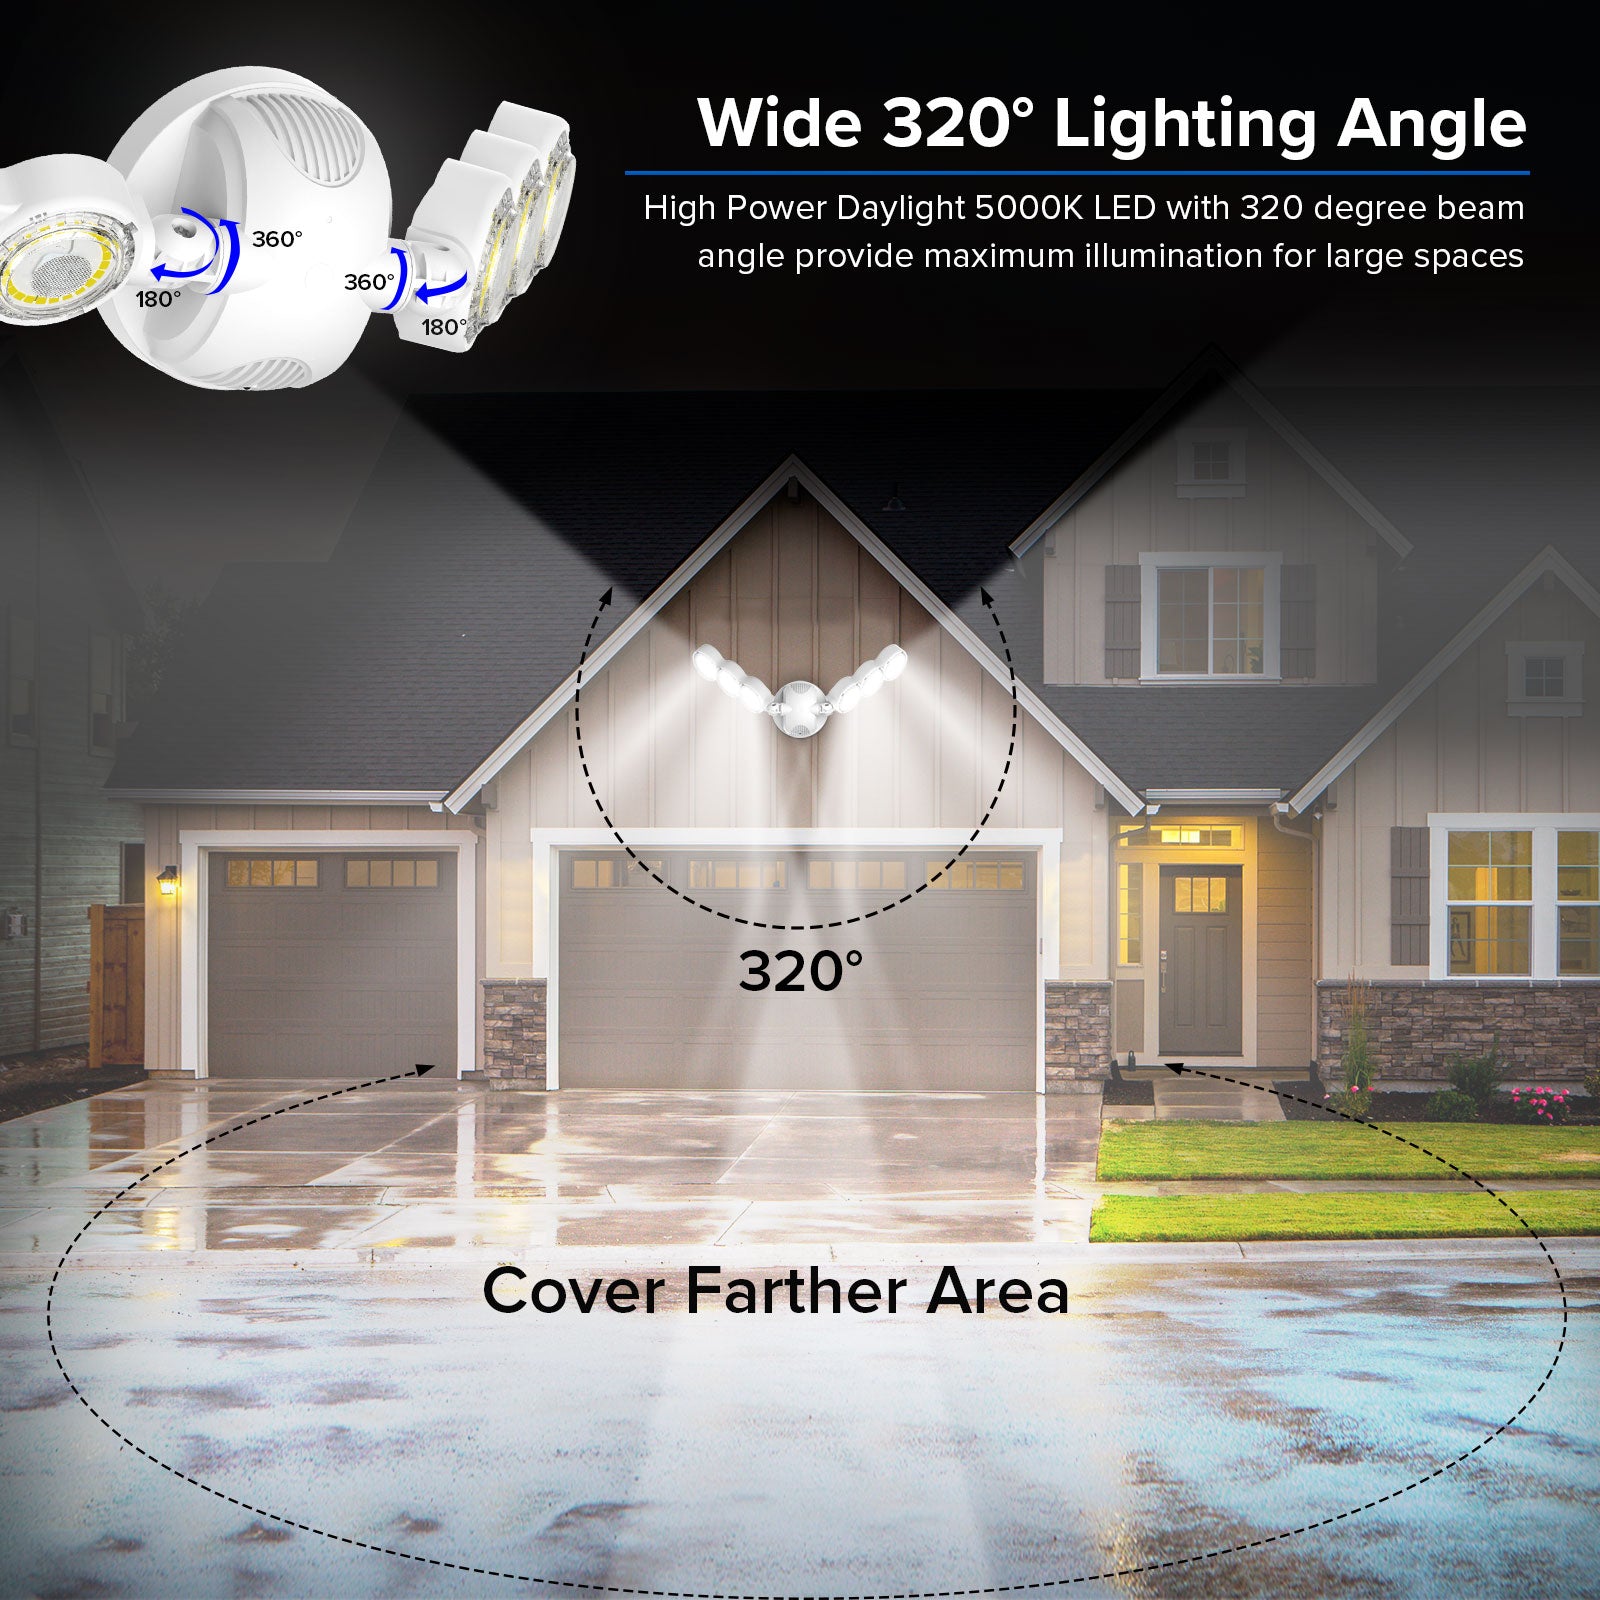 45W LED Security Light (Dusk to Dawn) with high power daylight 5000K led with 320 degree beam angle provide mavimum illumination for large spaces